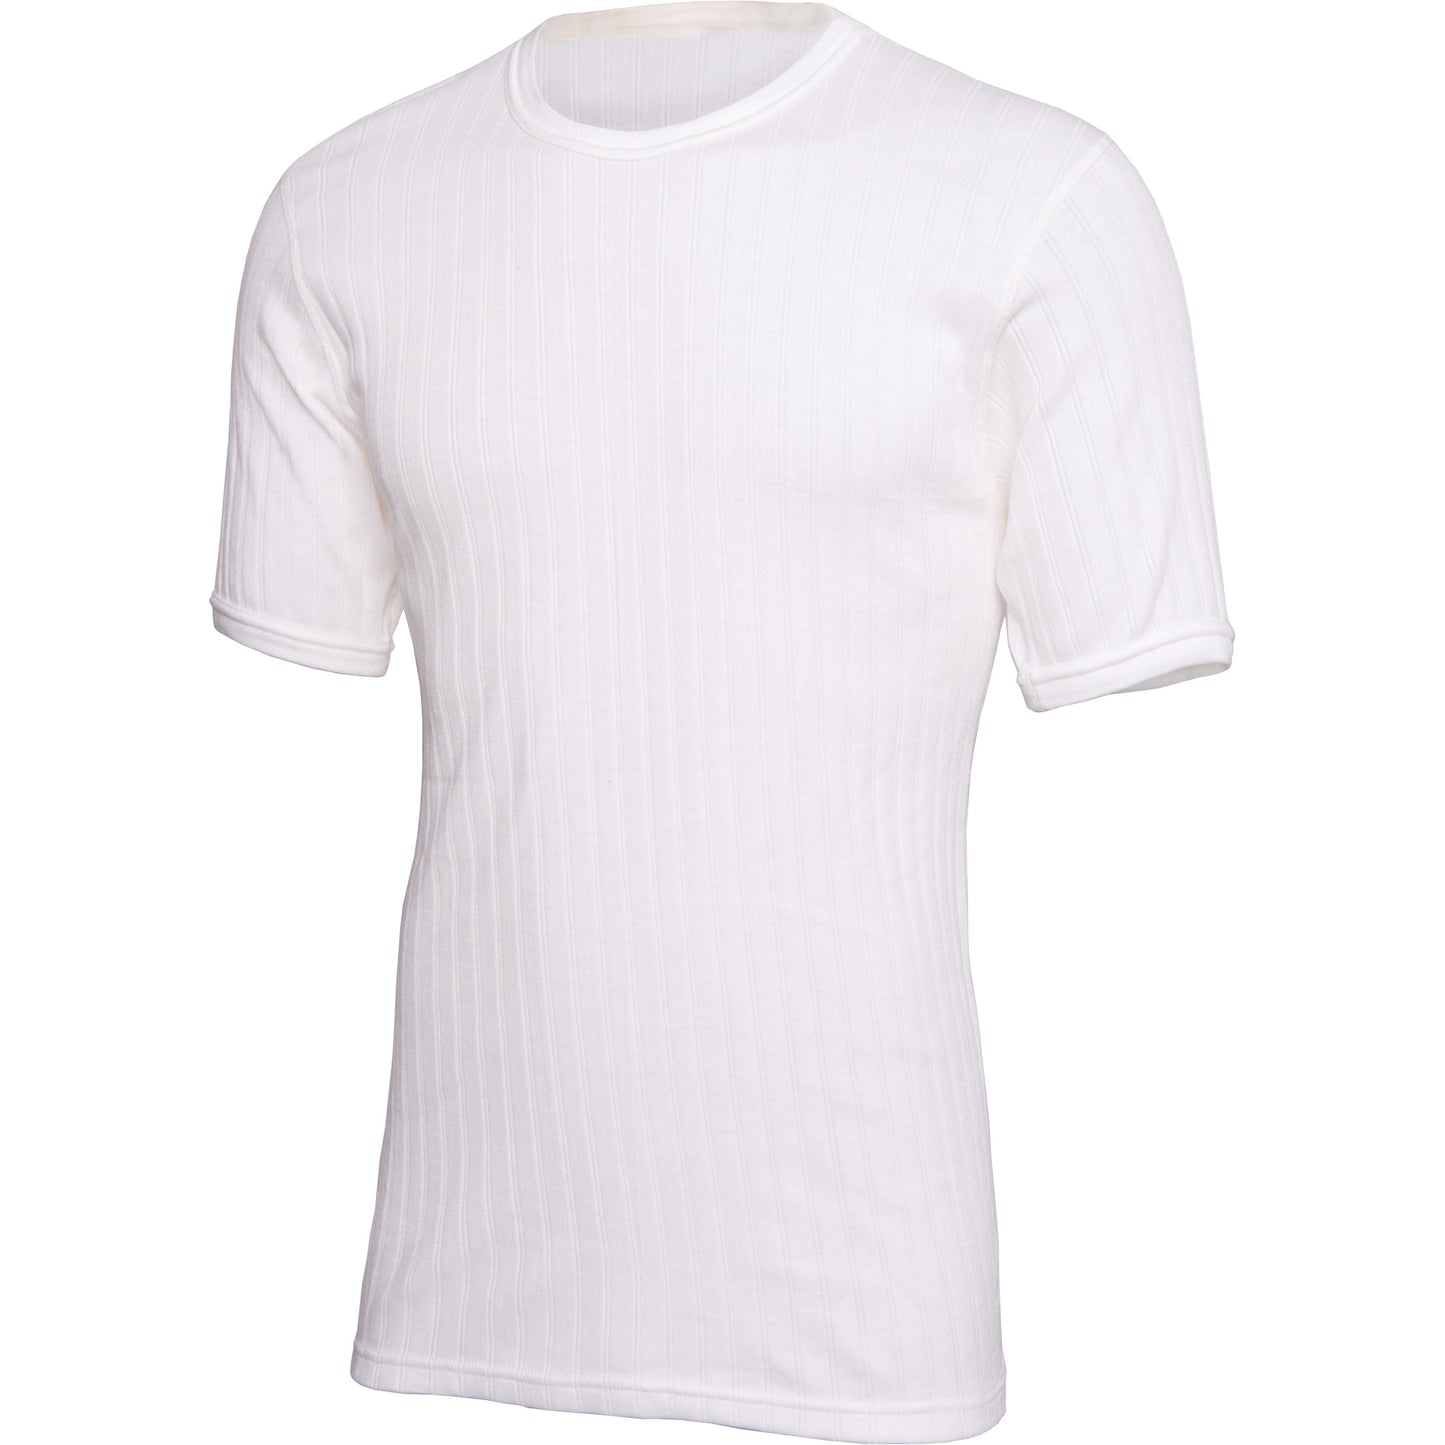 Guardian Short Sleeve Thermal T-Shirt